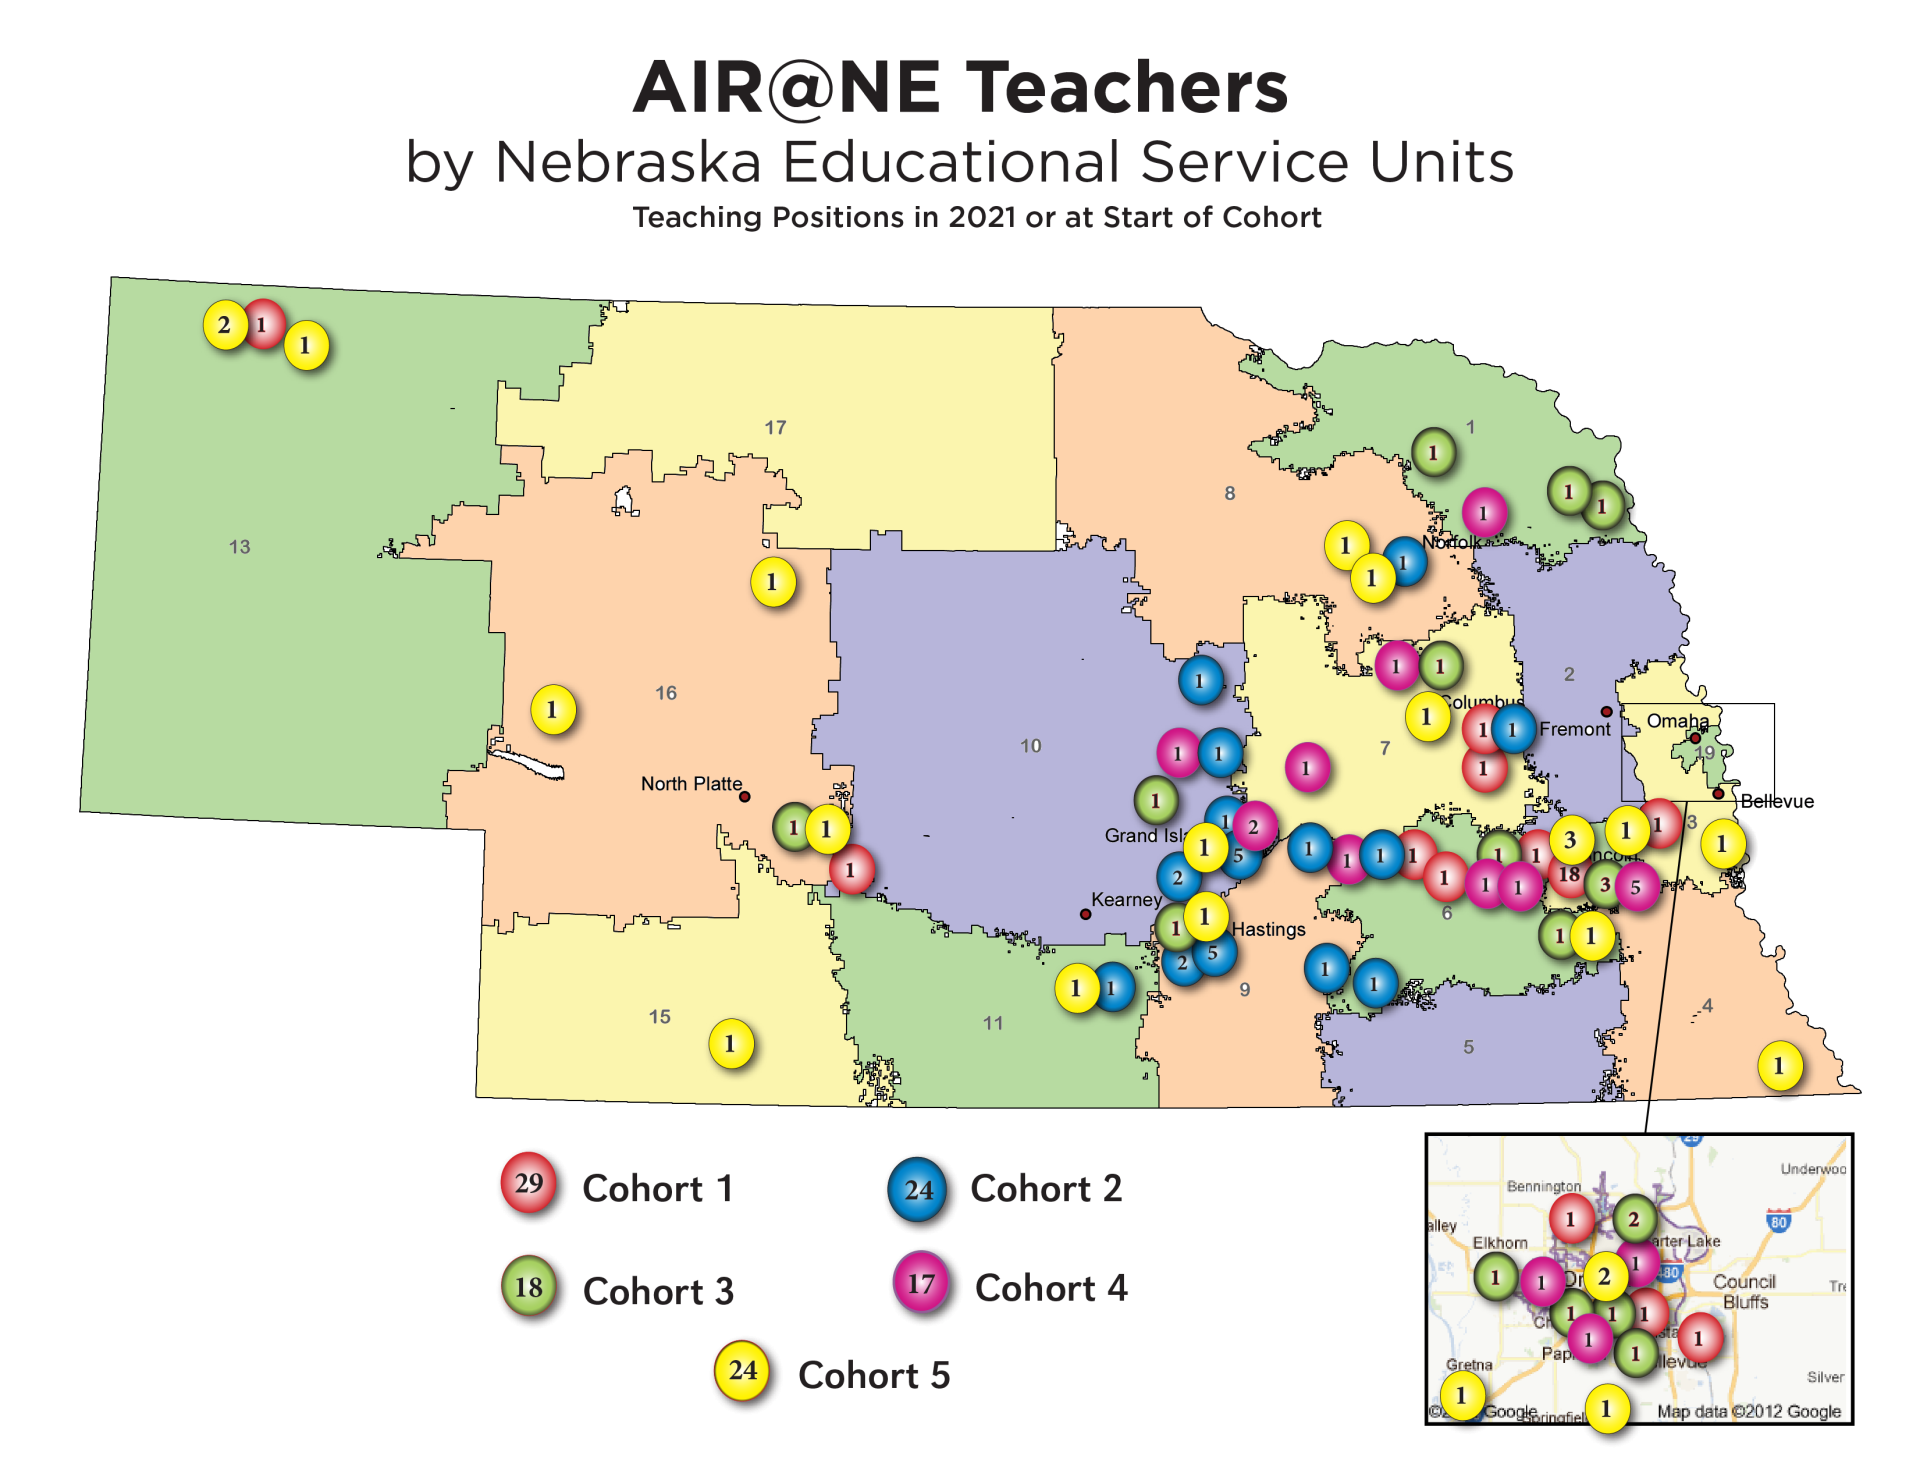 Participating teachers from across Nebraska